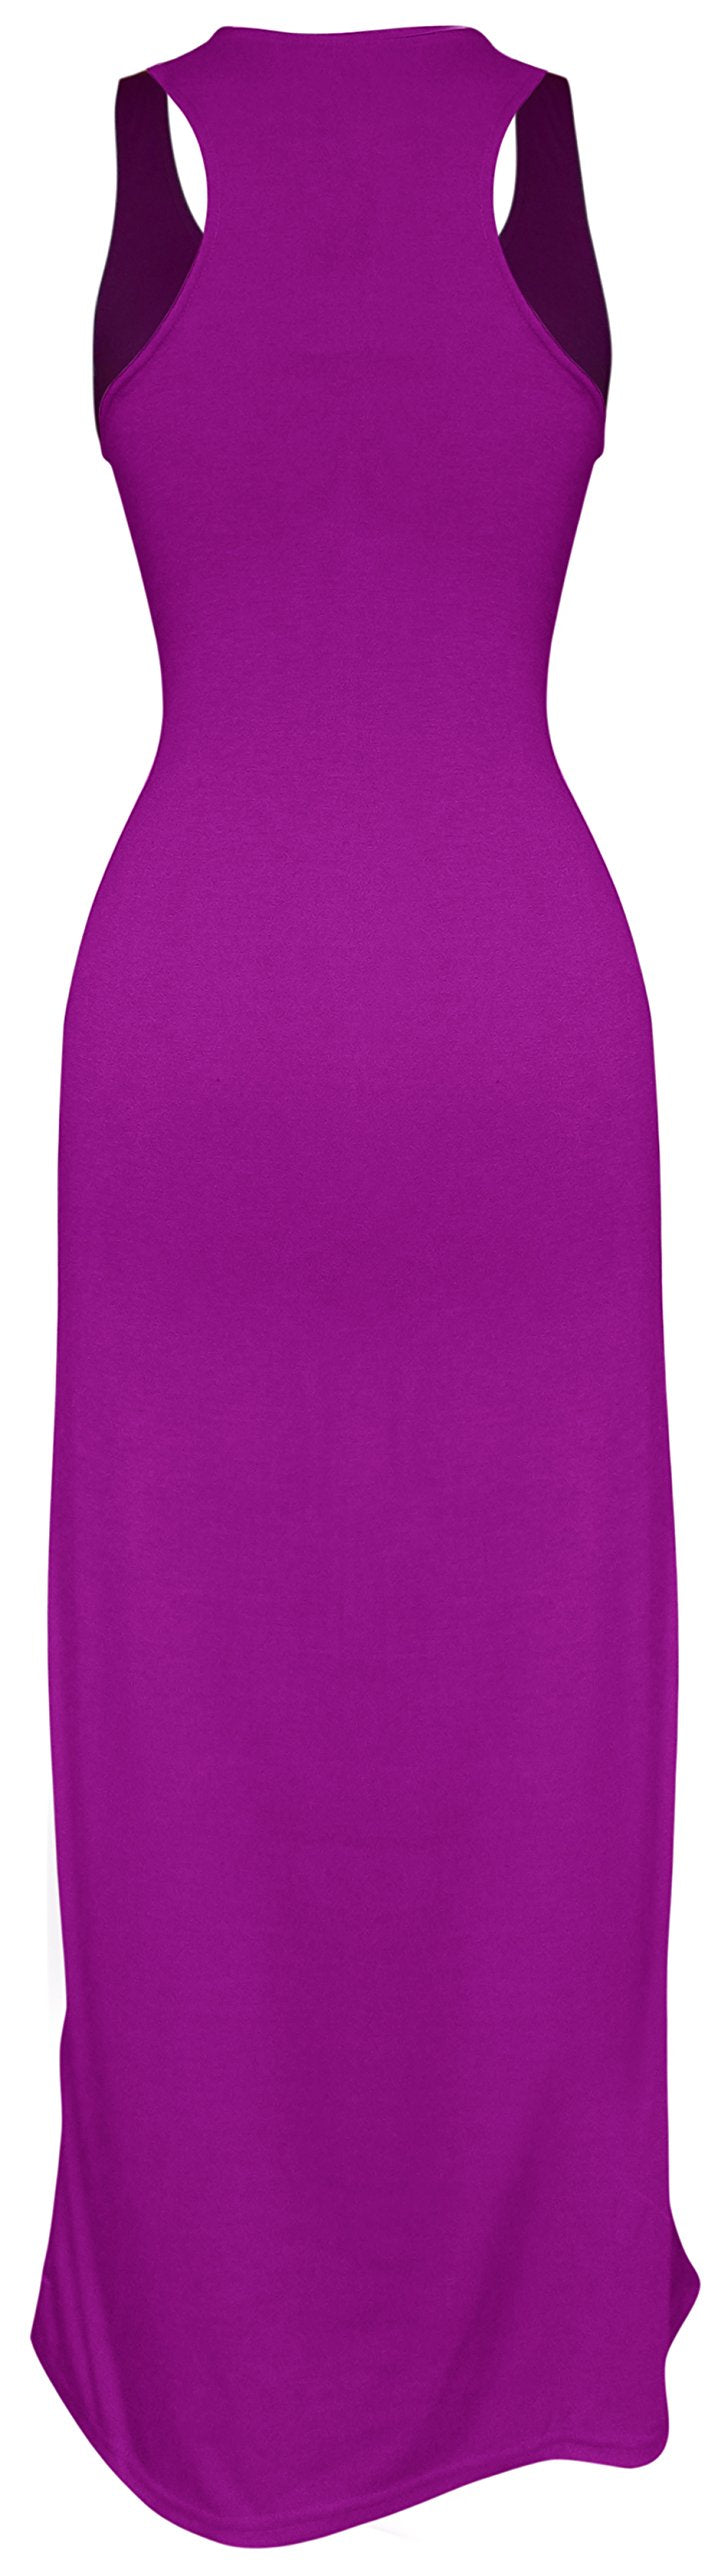 Racerback Summer Maxi Dress Striped Solid Sundress Purple XL